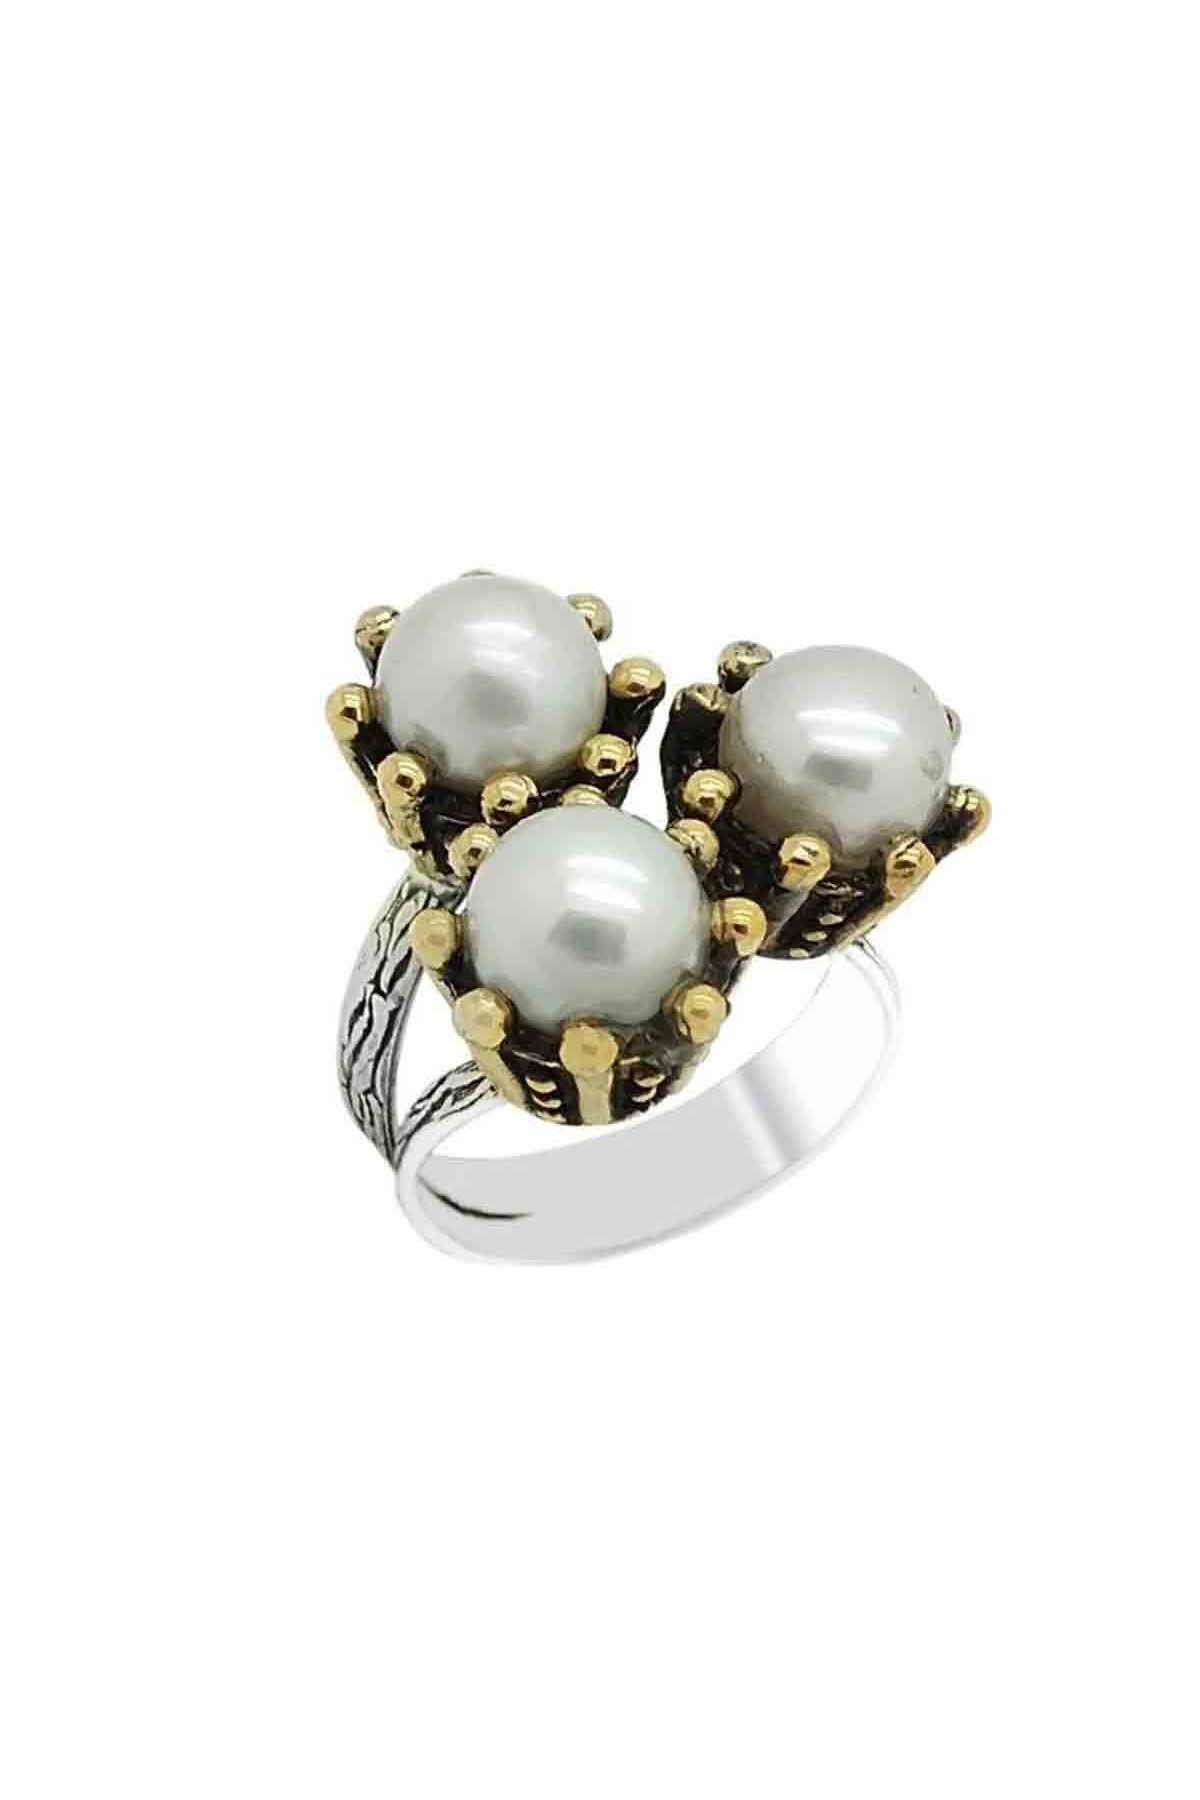 Söğütlü Series Silver Natural Pearl Stone Authentic Women's Ring Adjustable Size